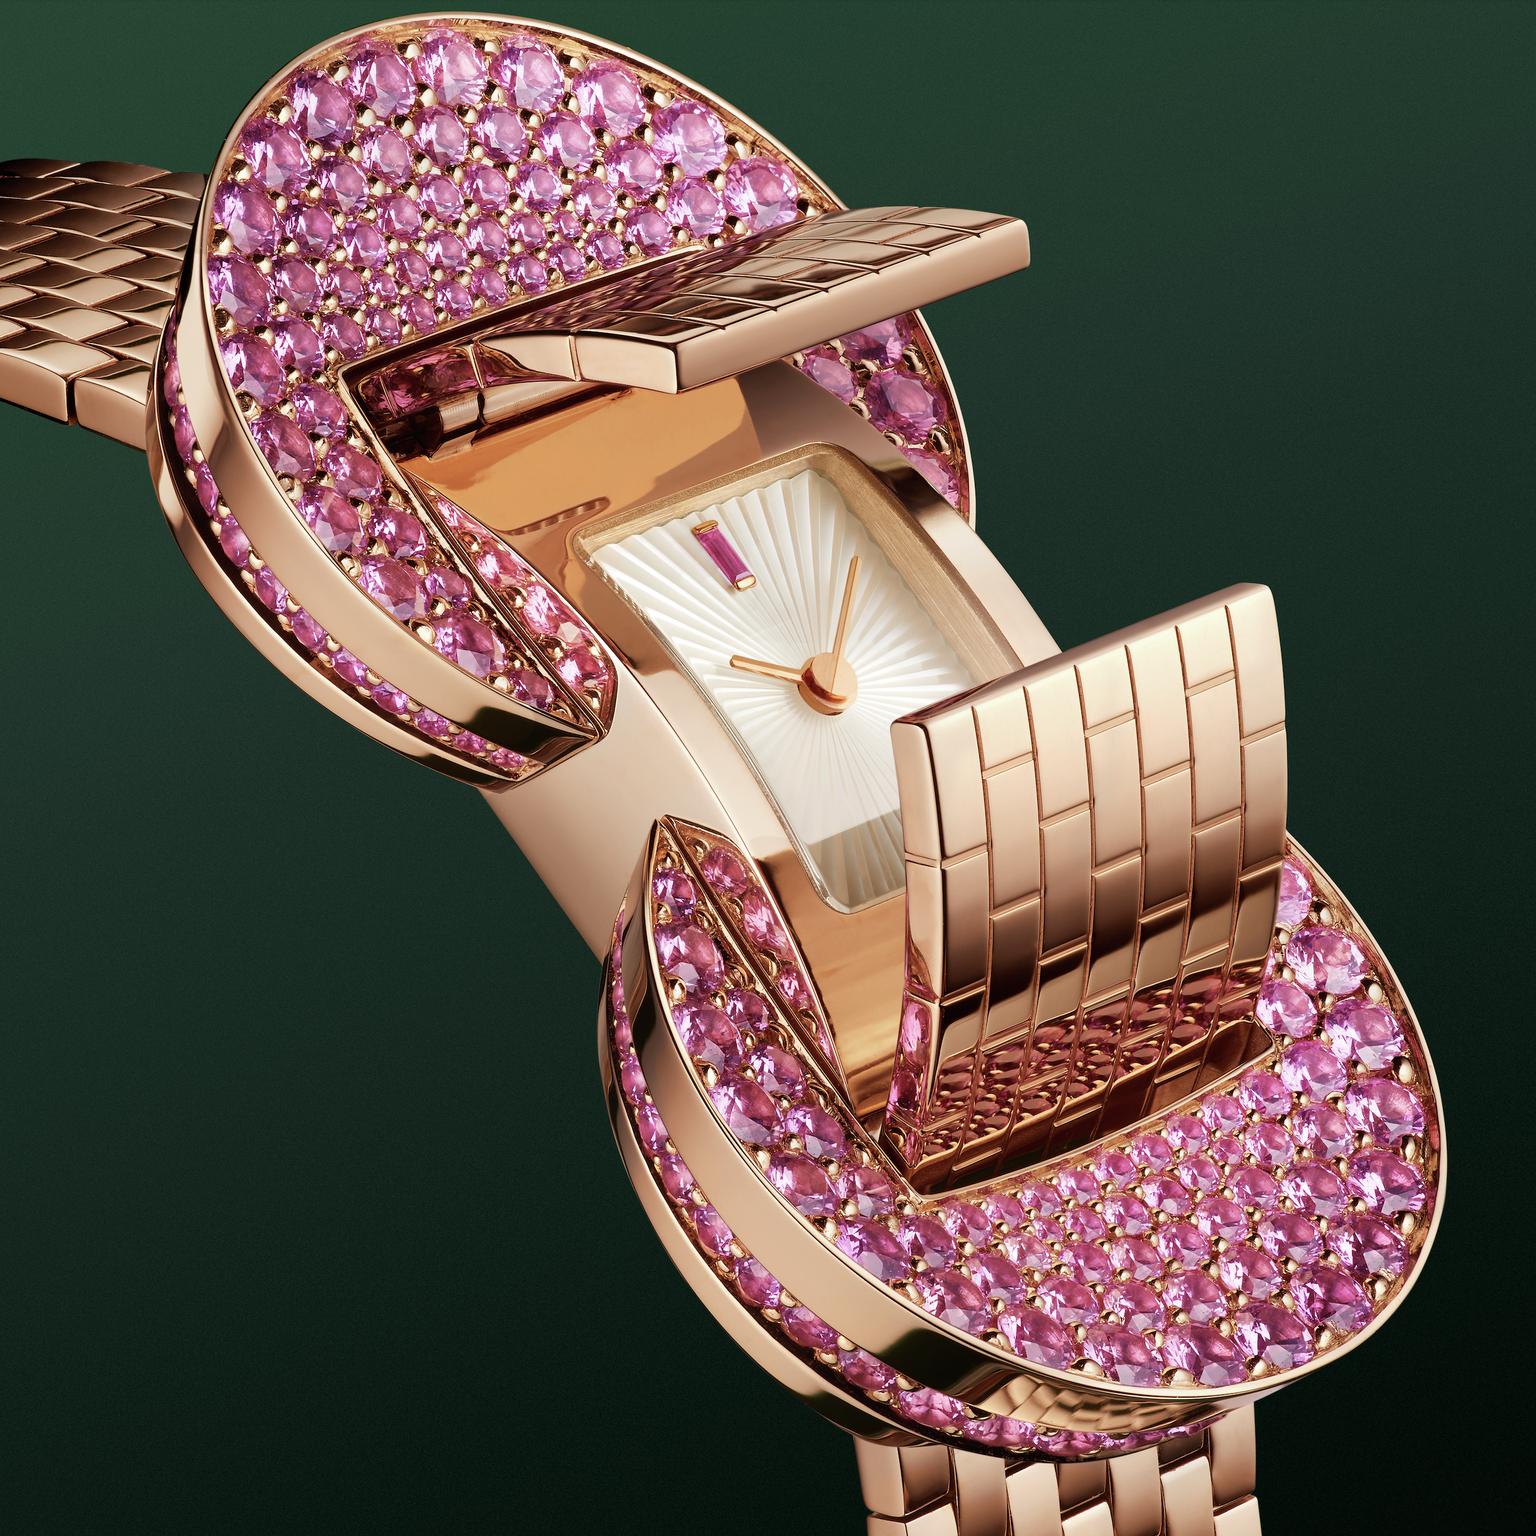 Mini Ludo Beauty watch by Van Cleef & Arpels